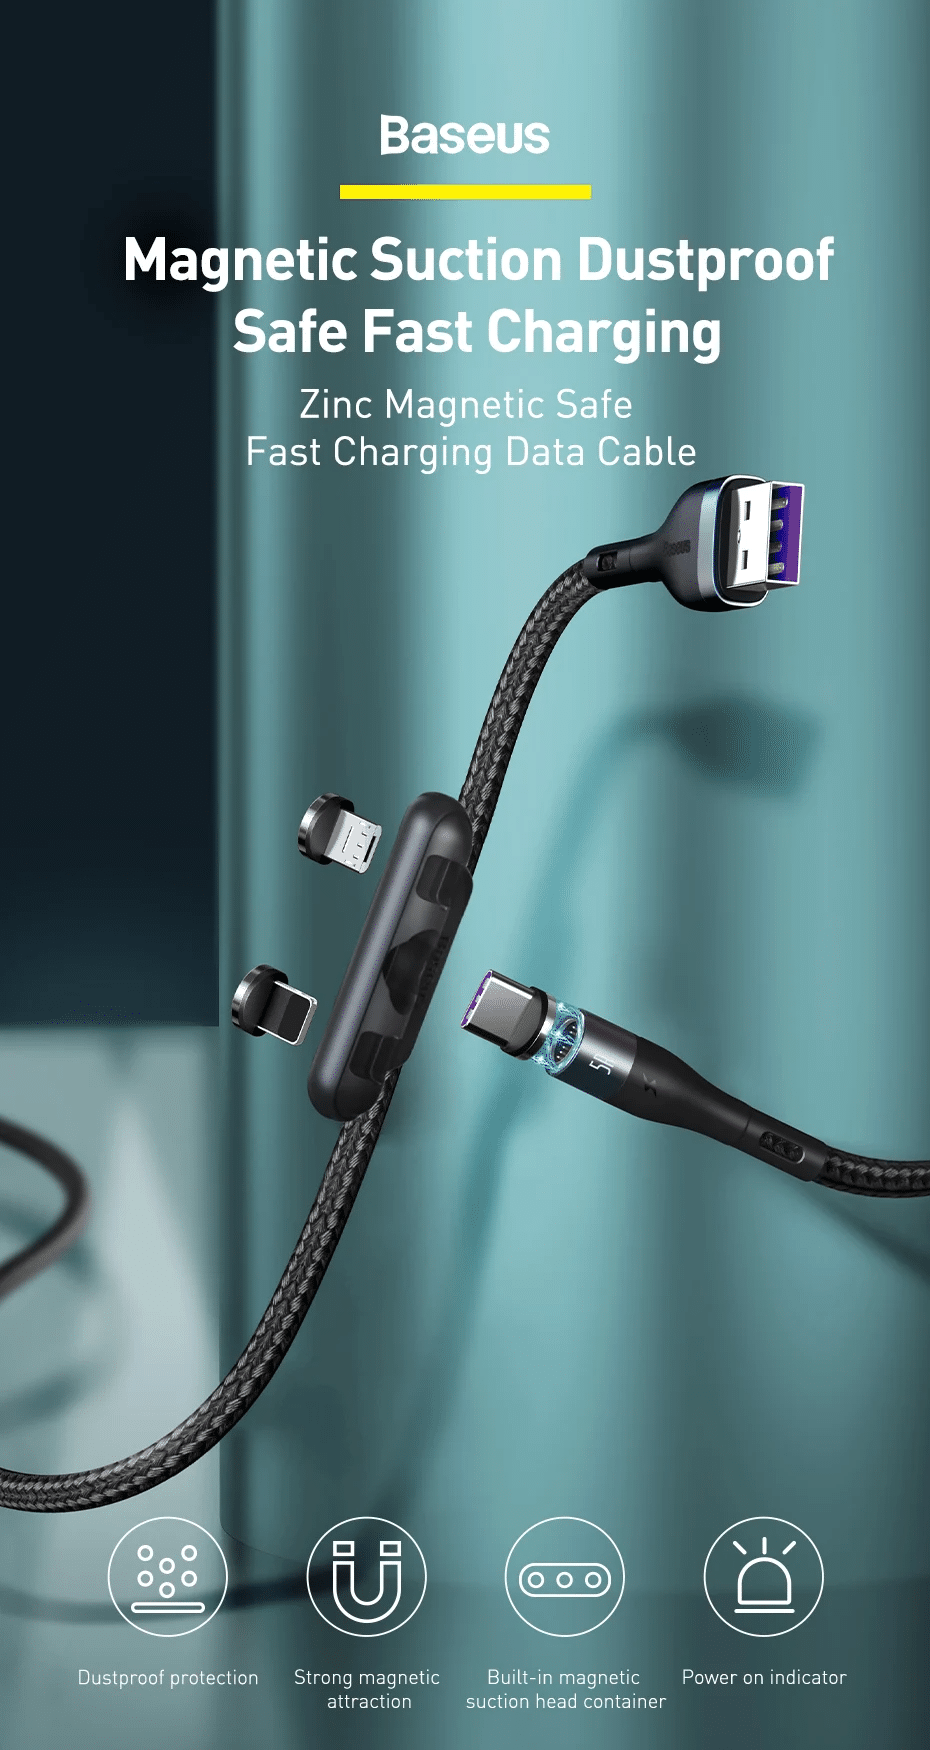 Baseus Zinc Magnetic Safe Fast Charging Data Cable 1